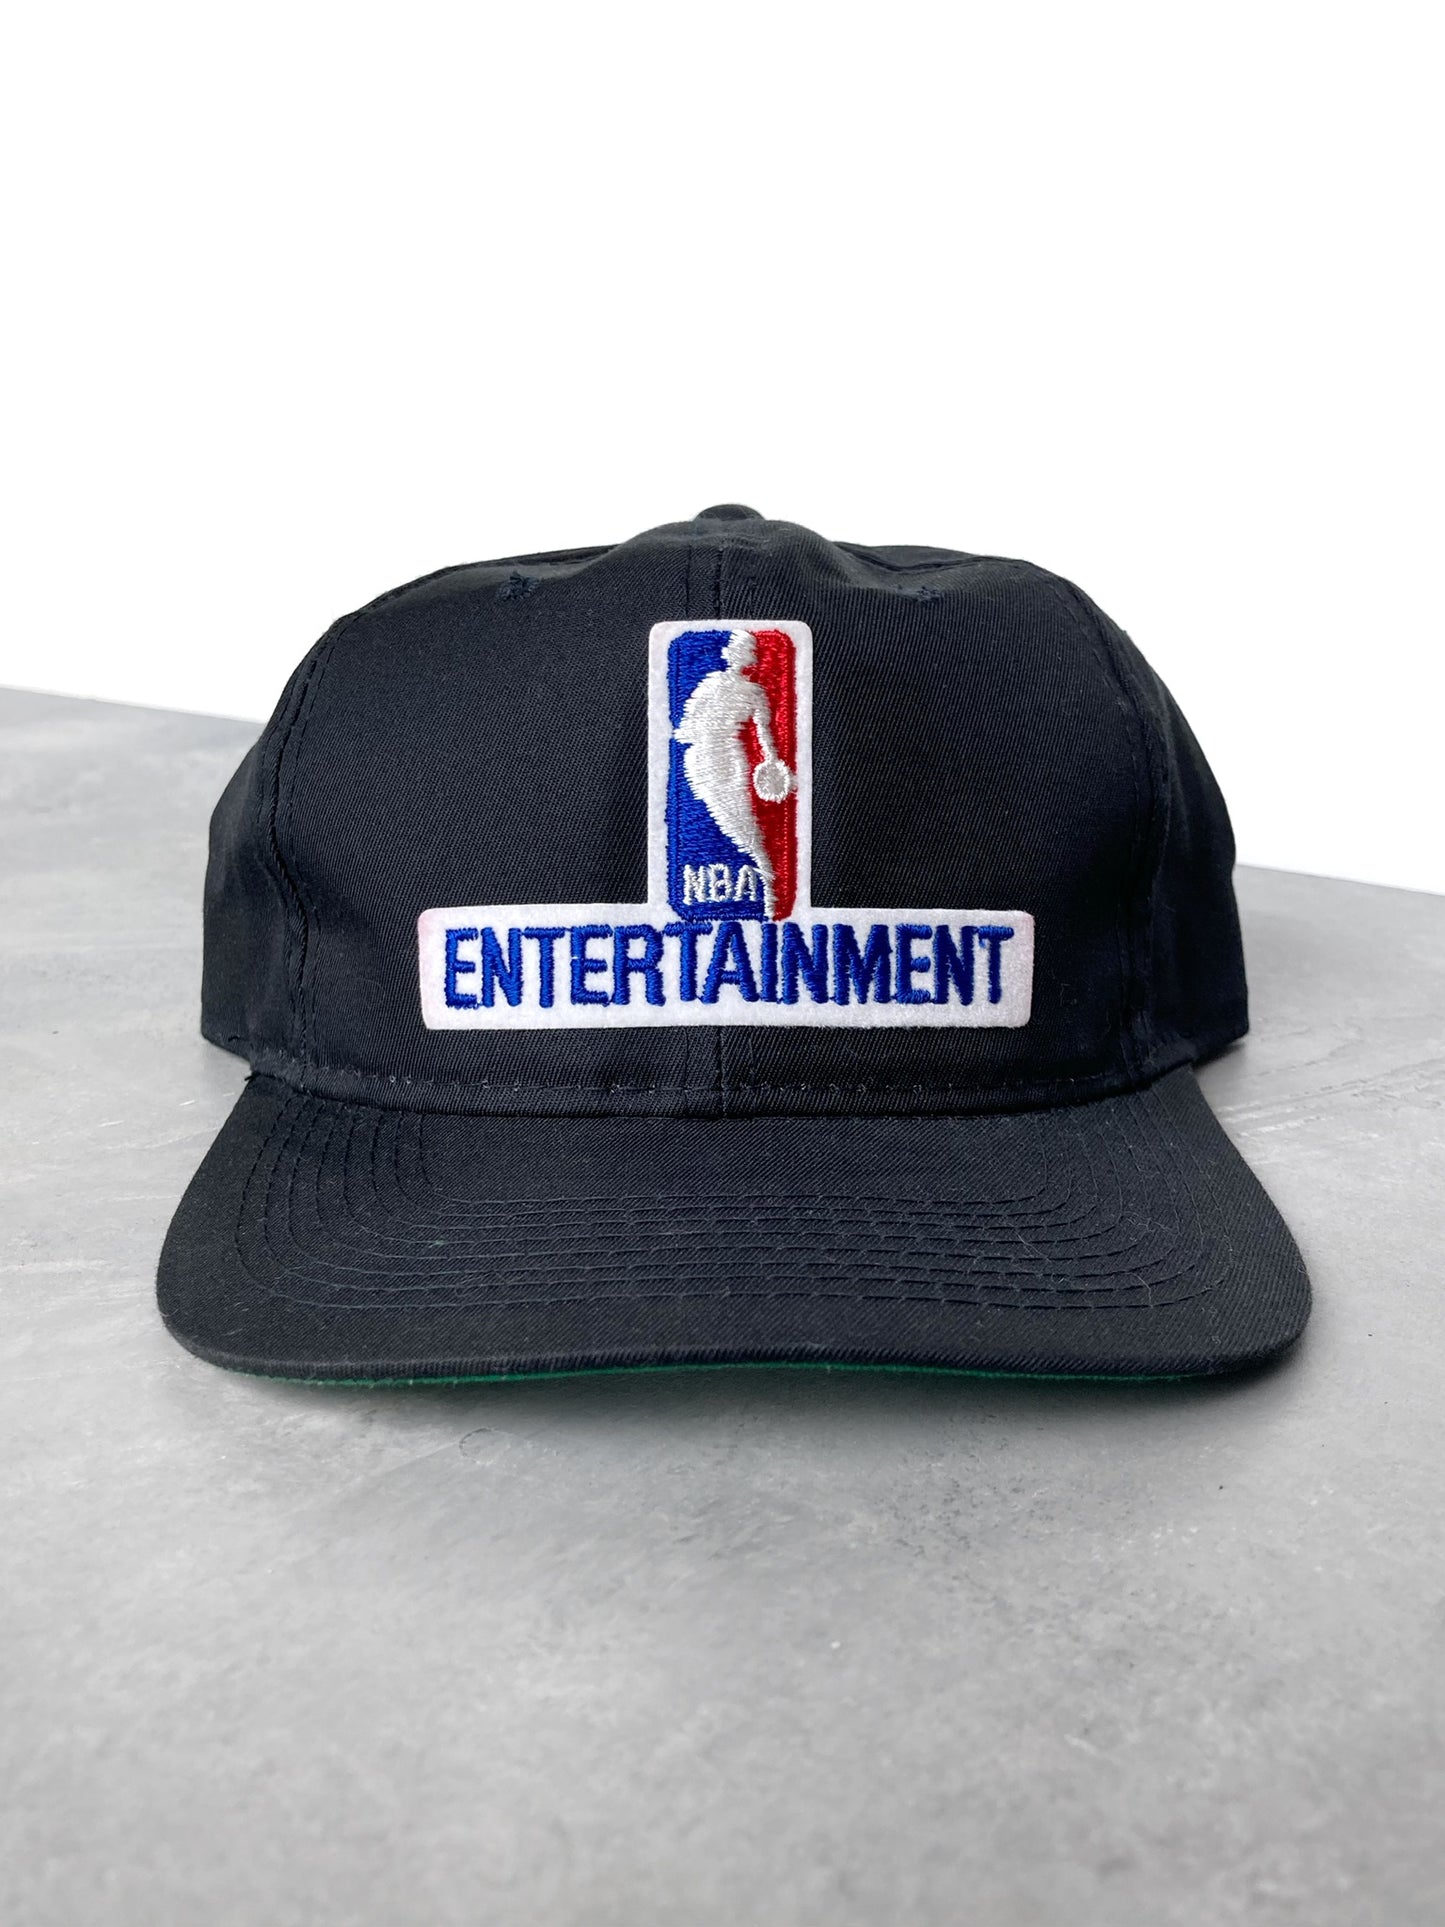 NBA Entertainment Hat 90's